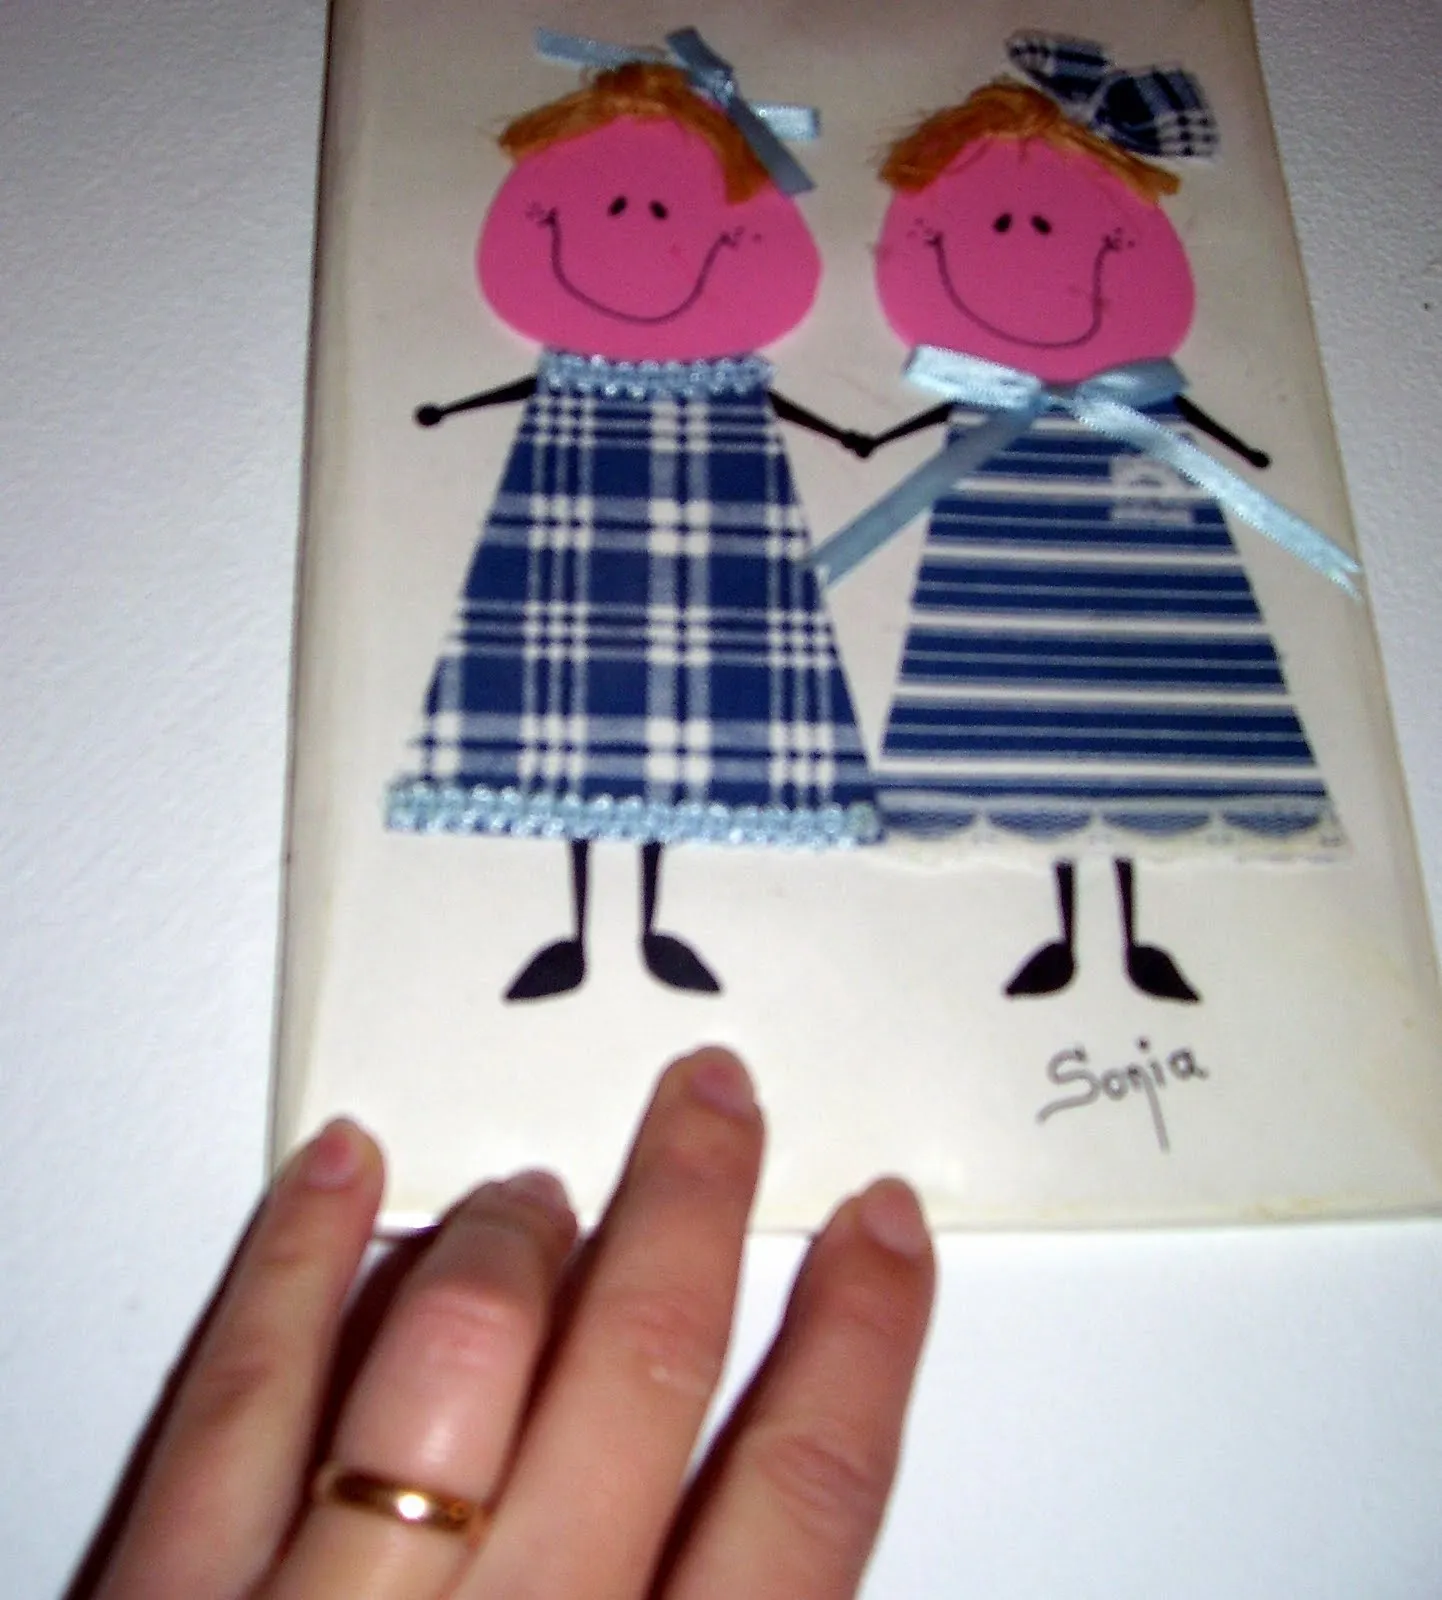 RECREAR - MANUALIDADES - ARTE: Cuaderno forrado con muñecas.